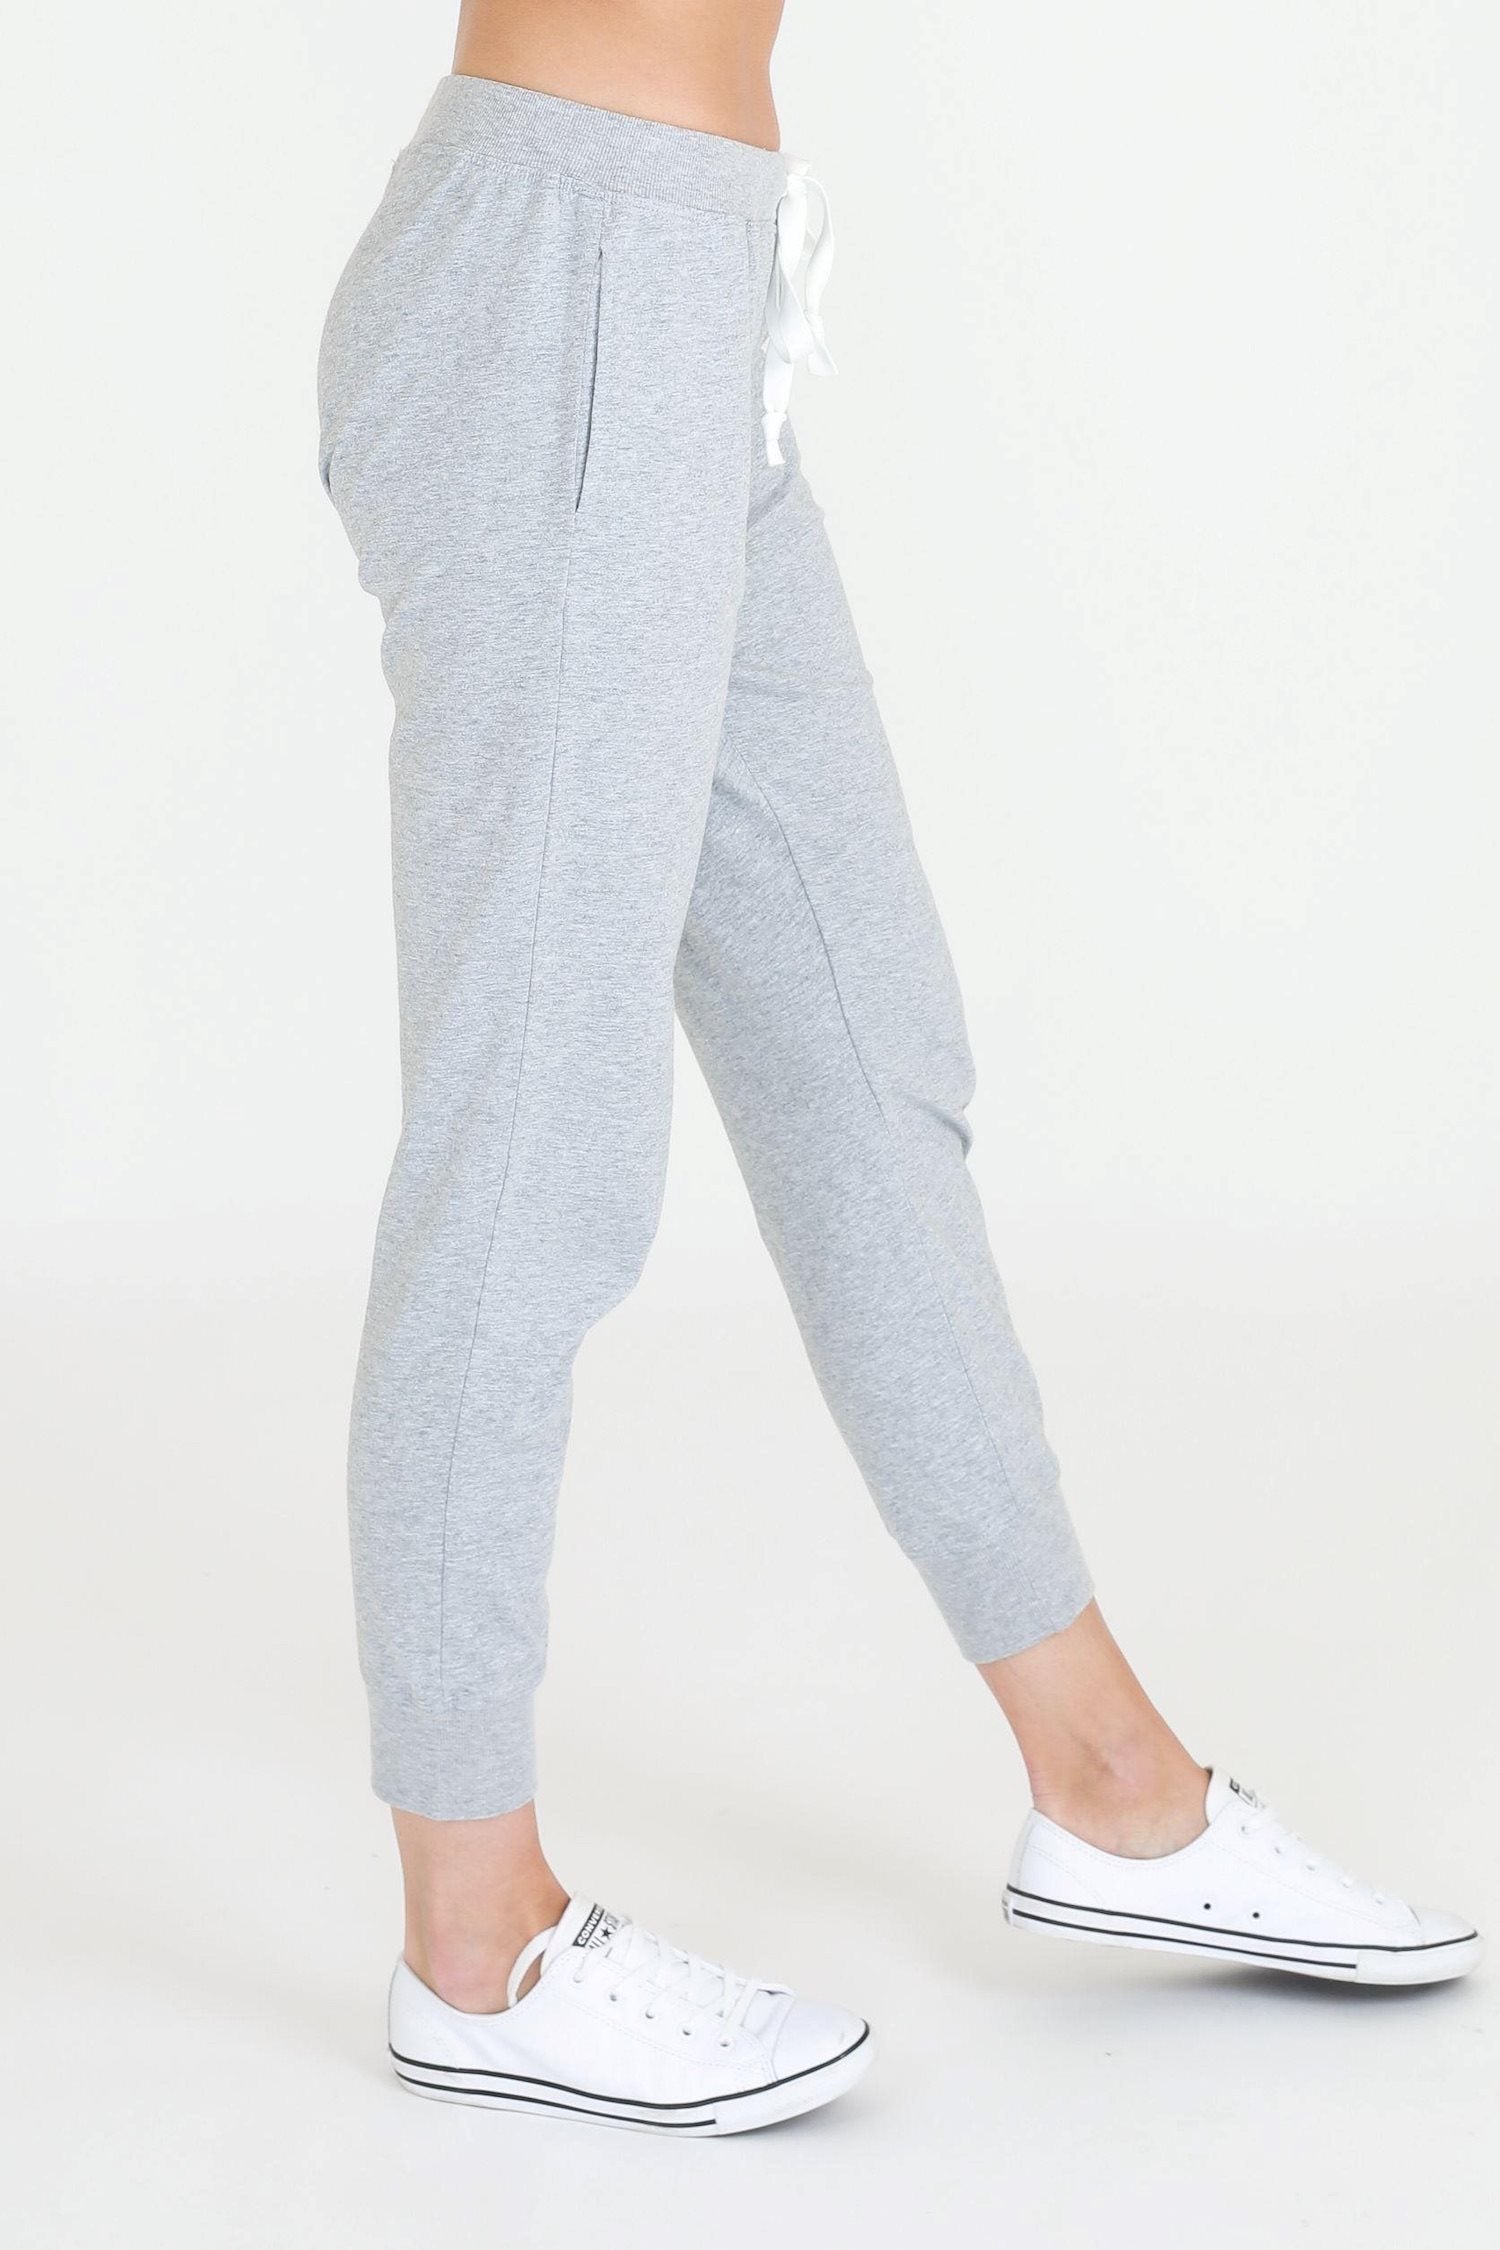 grey track pants womens #color_grey marle